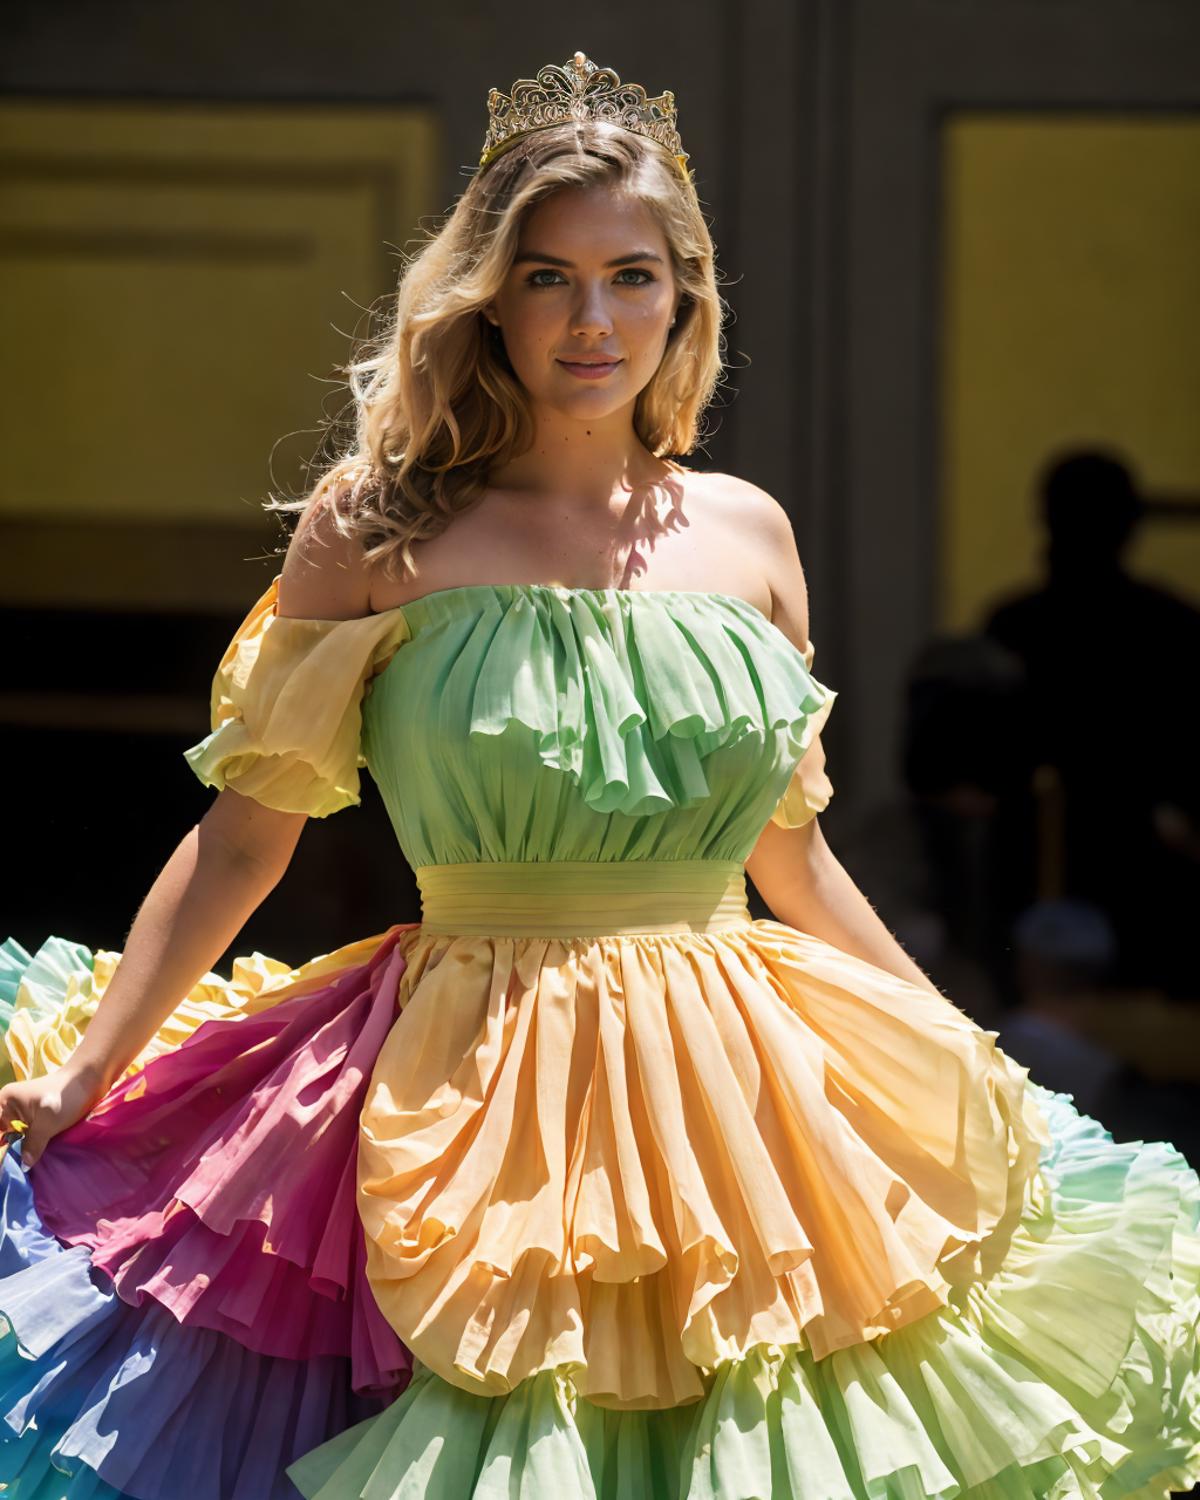 Colorful Dress image by GracefulFox